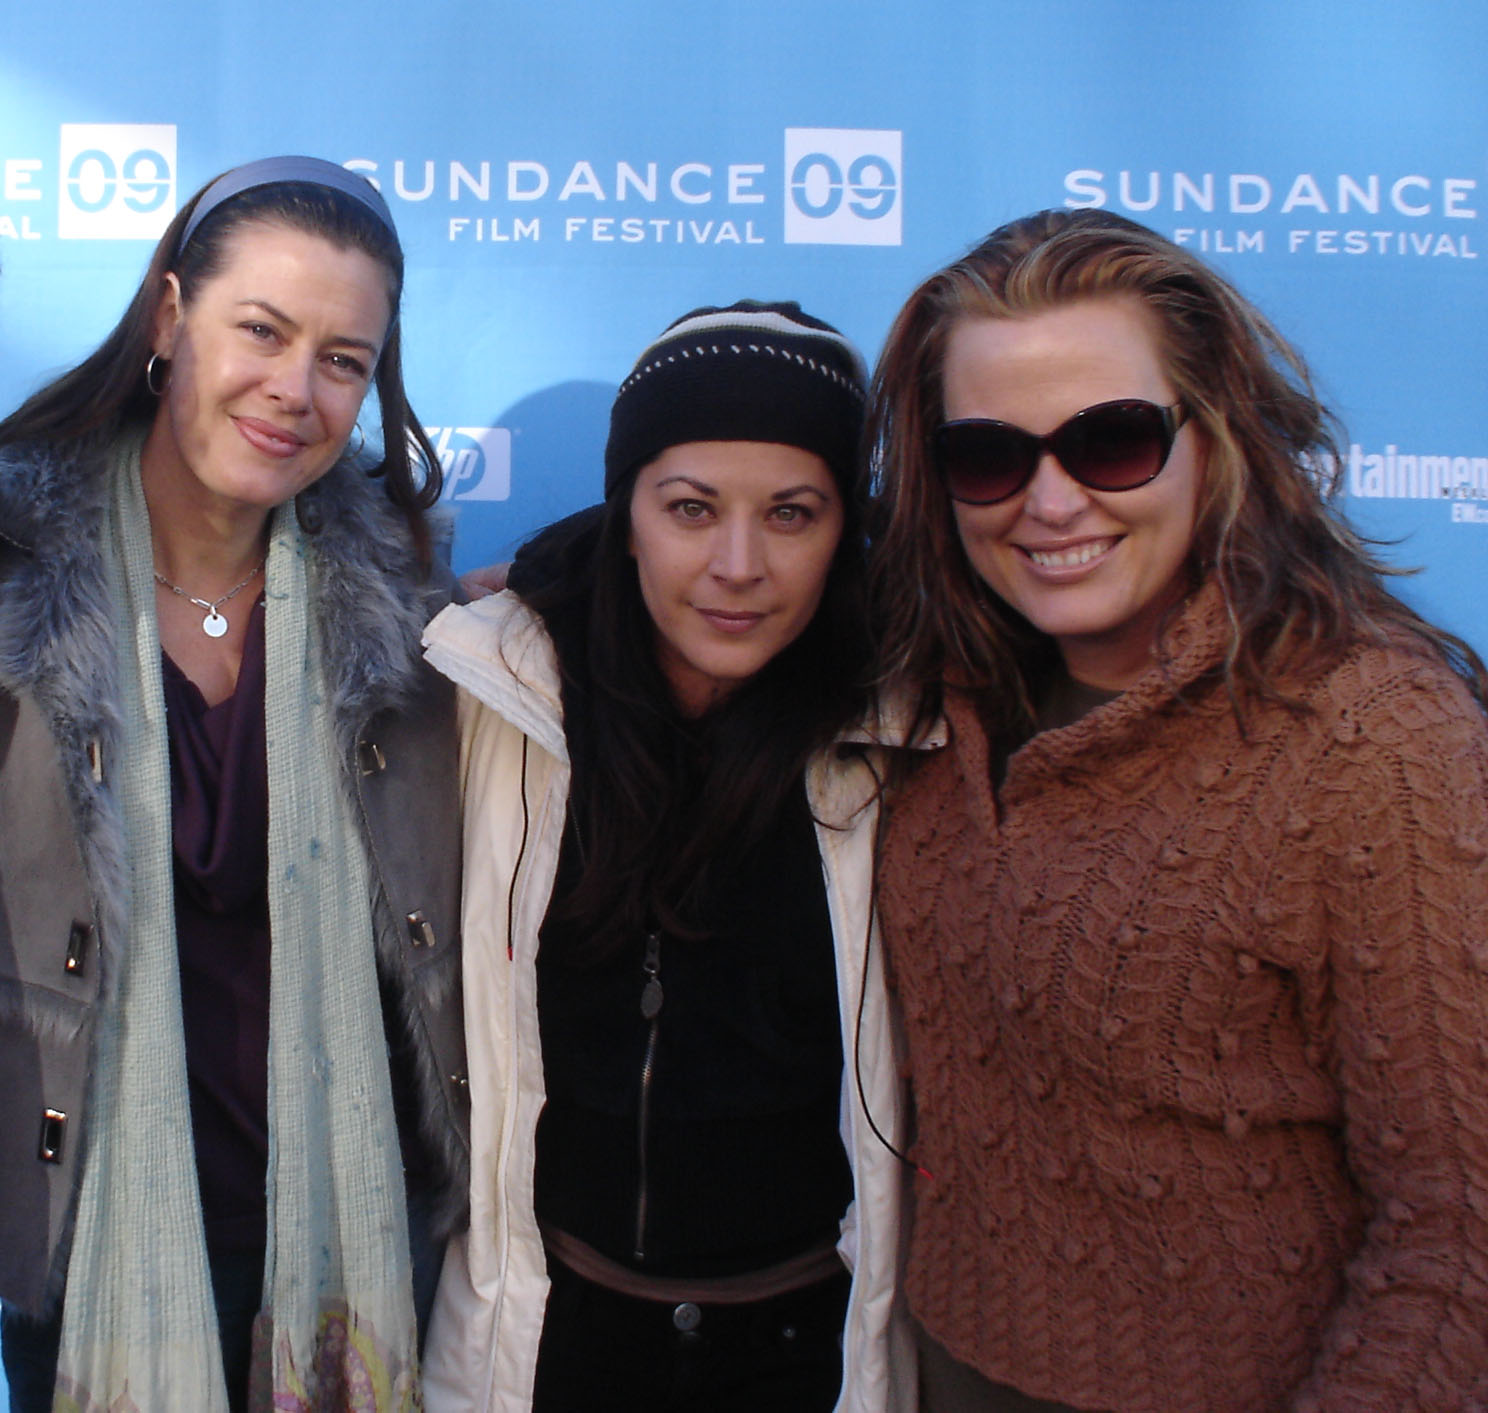 Change Is Gonna Come. Sundance Film Festival 2009. (L to R) Stacey Martino, Camillia Monet, Tasha Oldham.